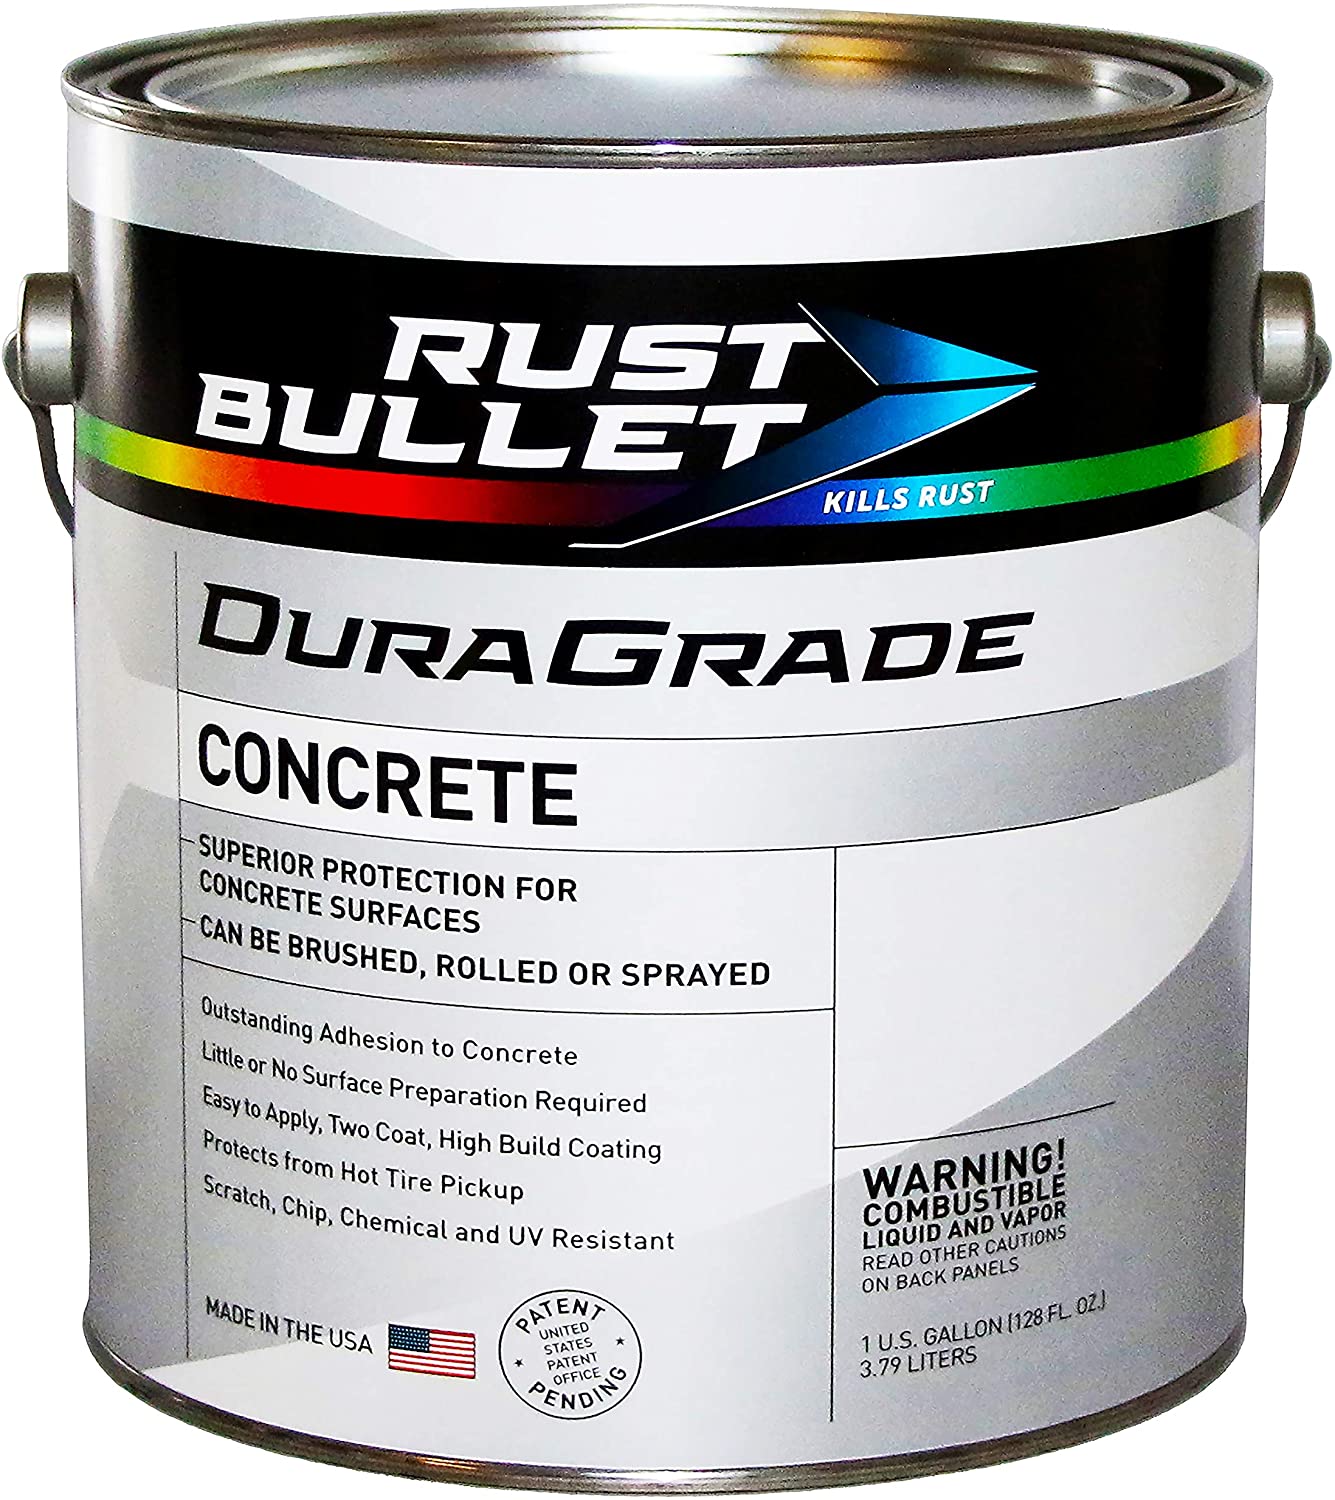 Rust Bullet DuraGrade Concrete High-Performance Paint